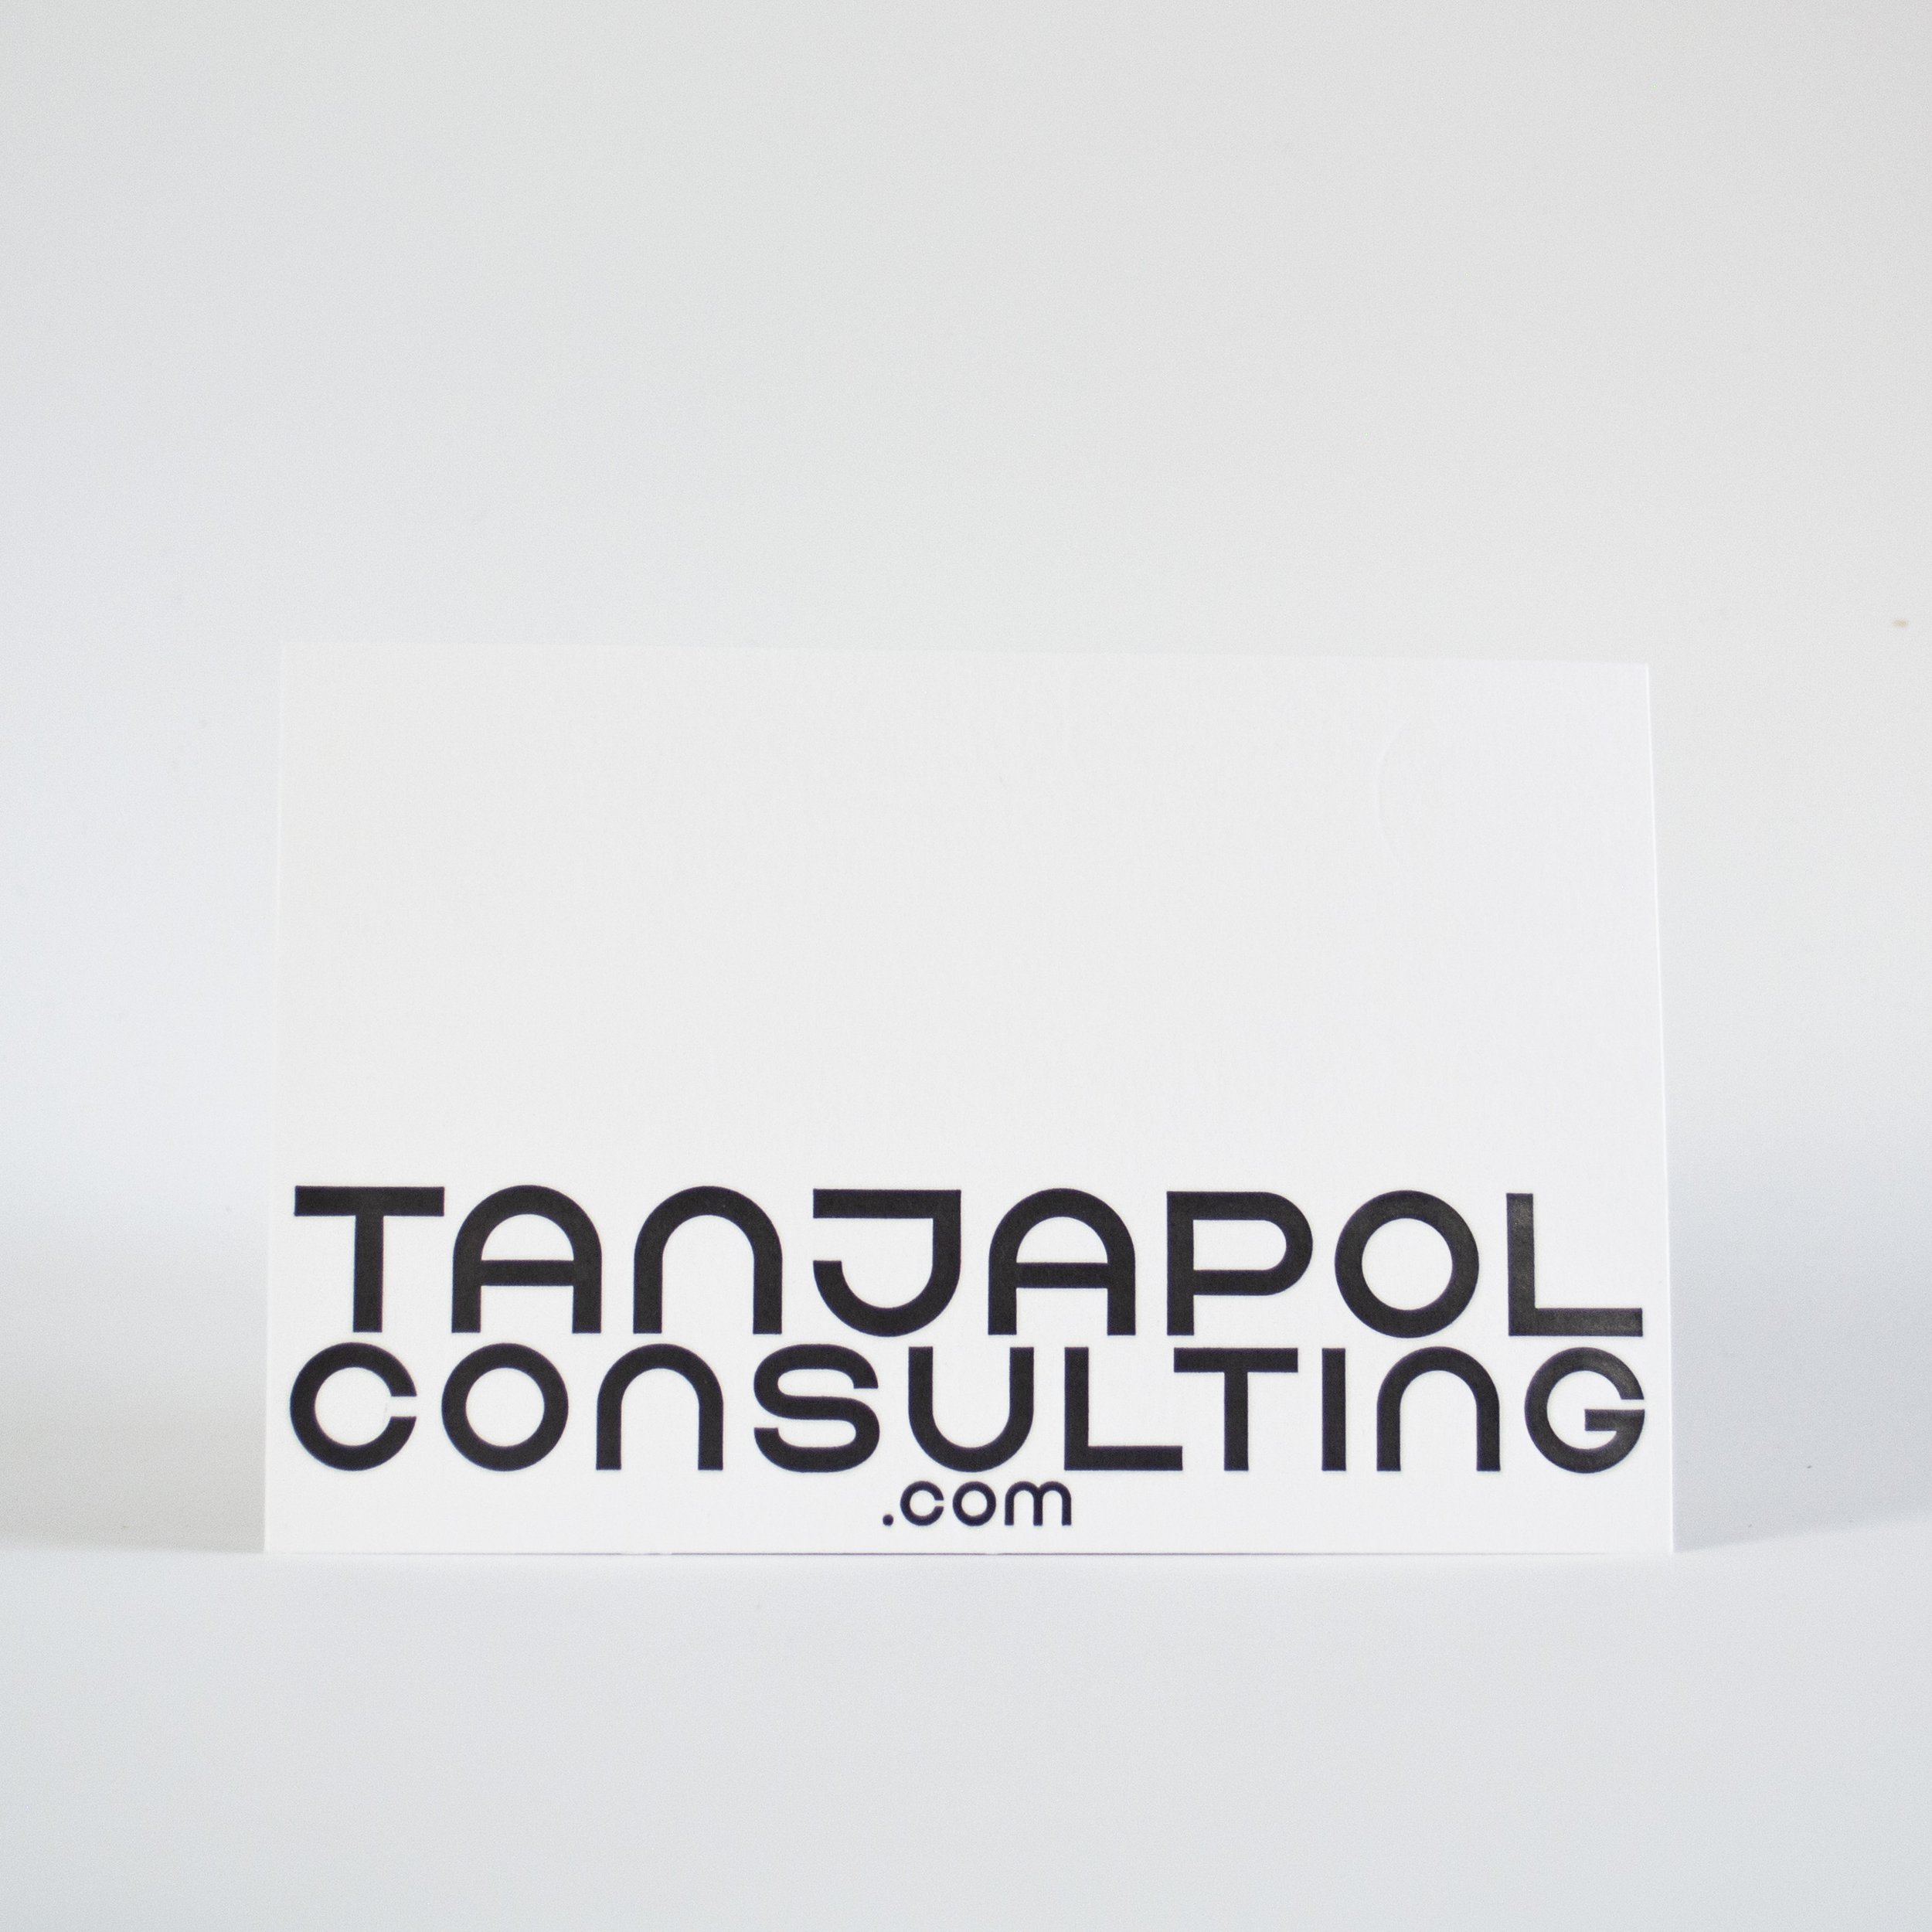 Tanja Pol Consulting 